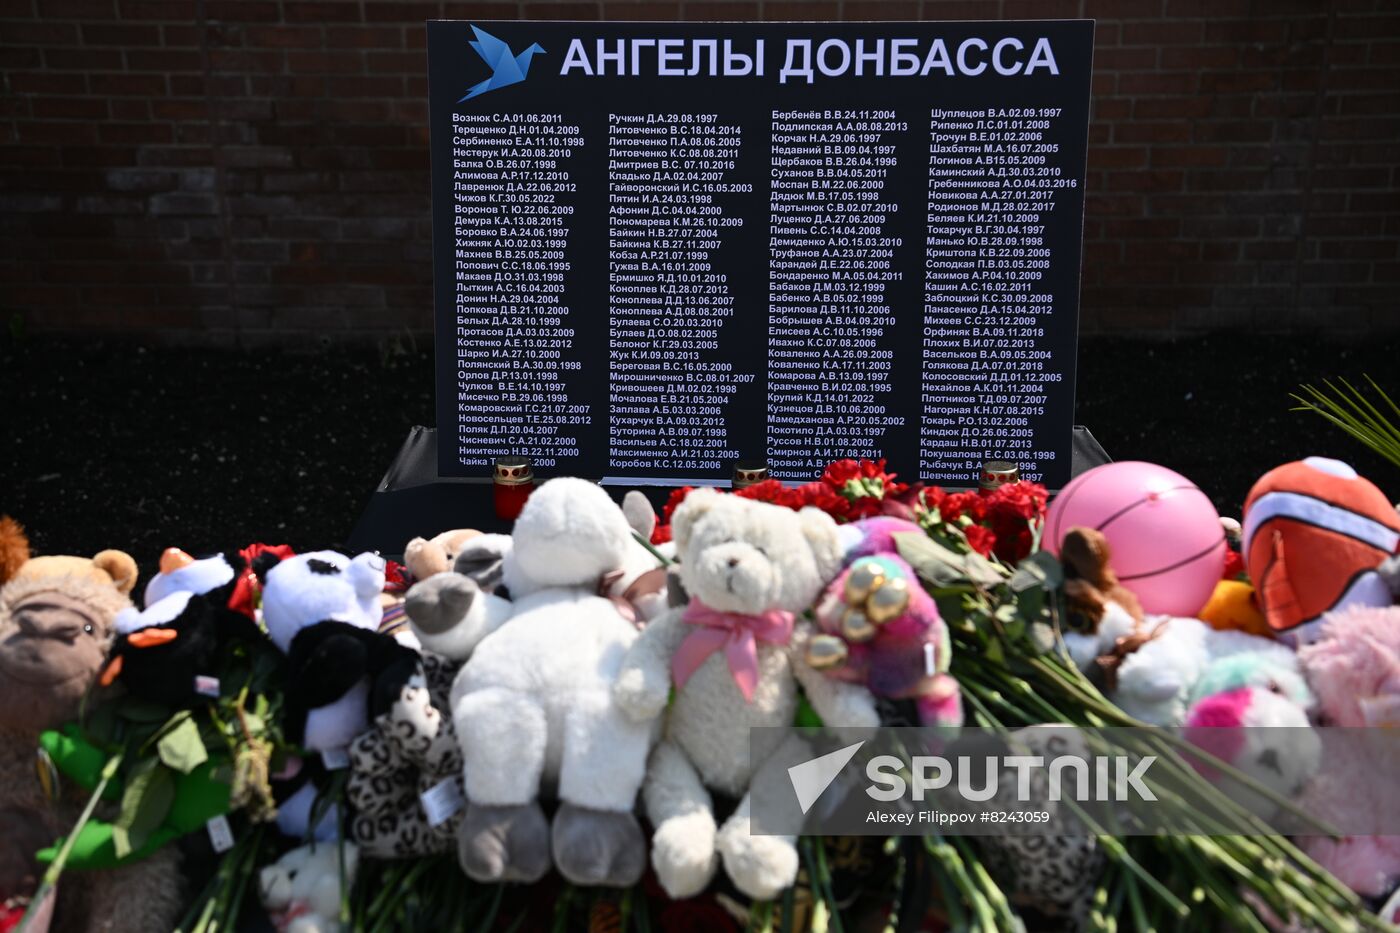 Russia DPR Victims Memorial